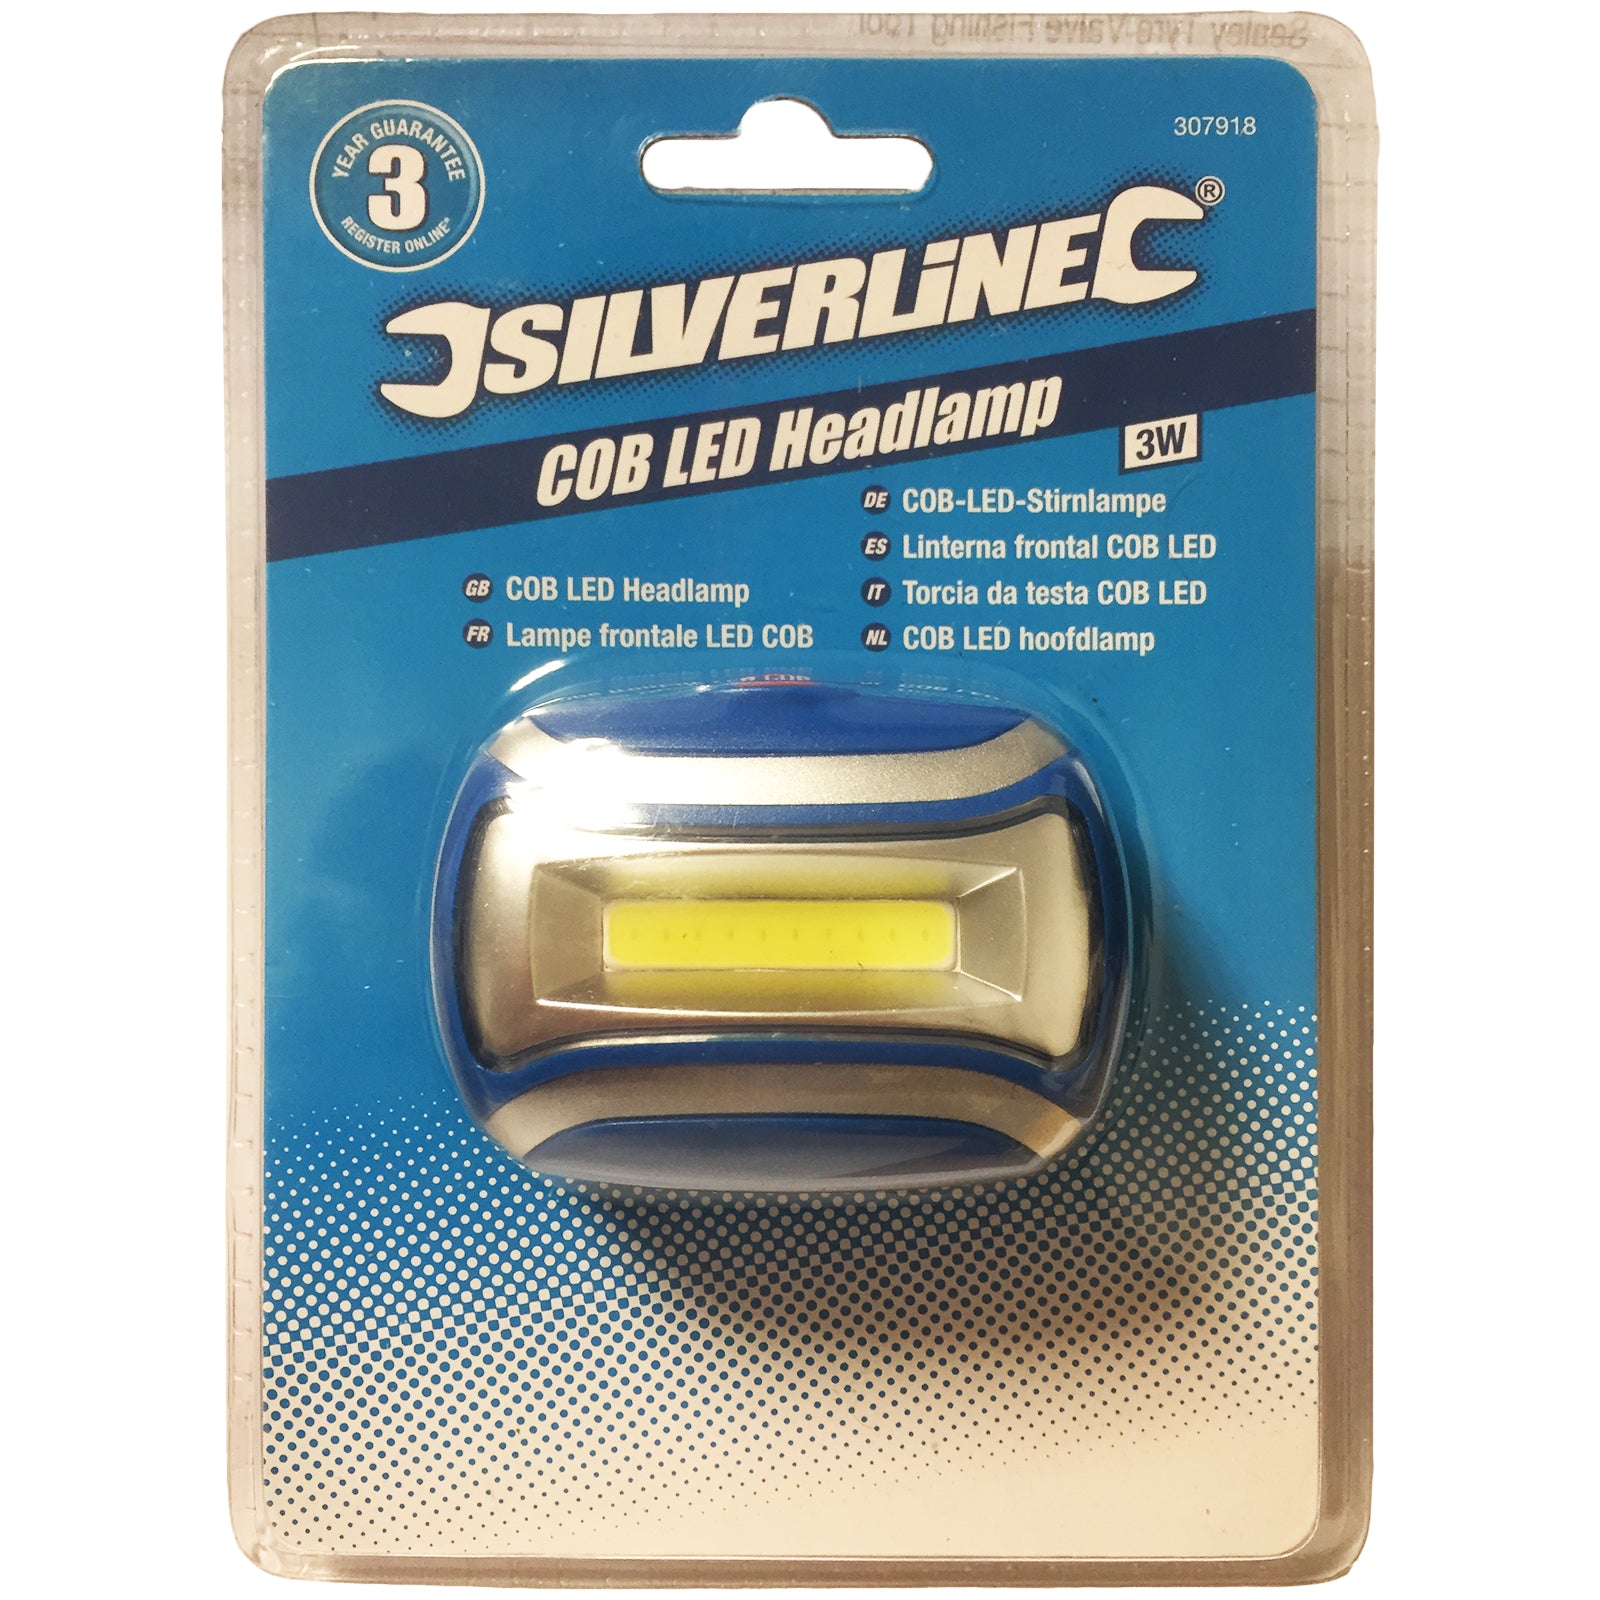 Silverline 3W COB LED Headlamp